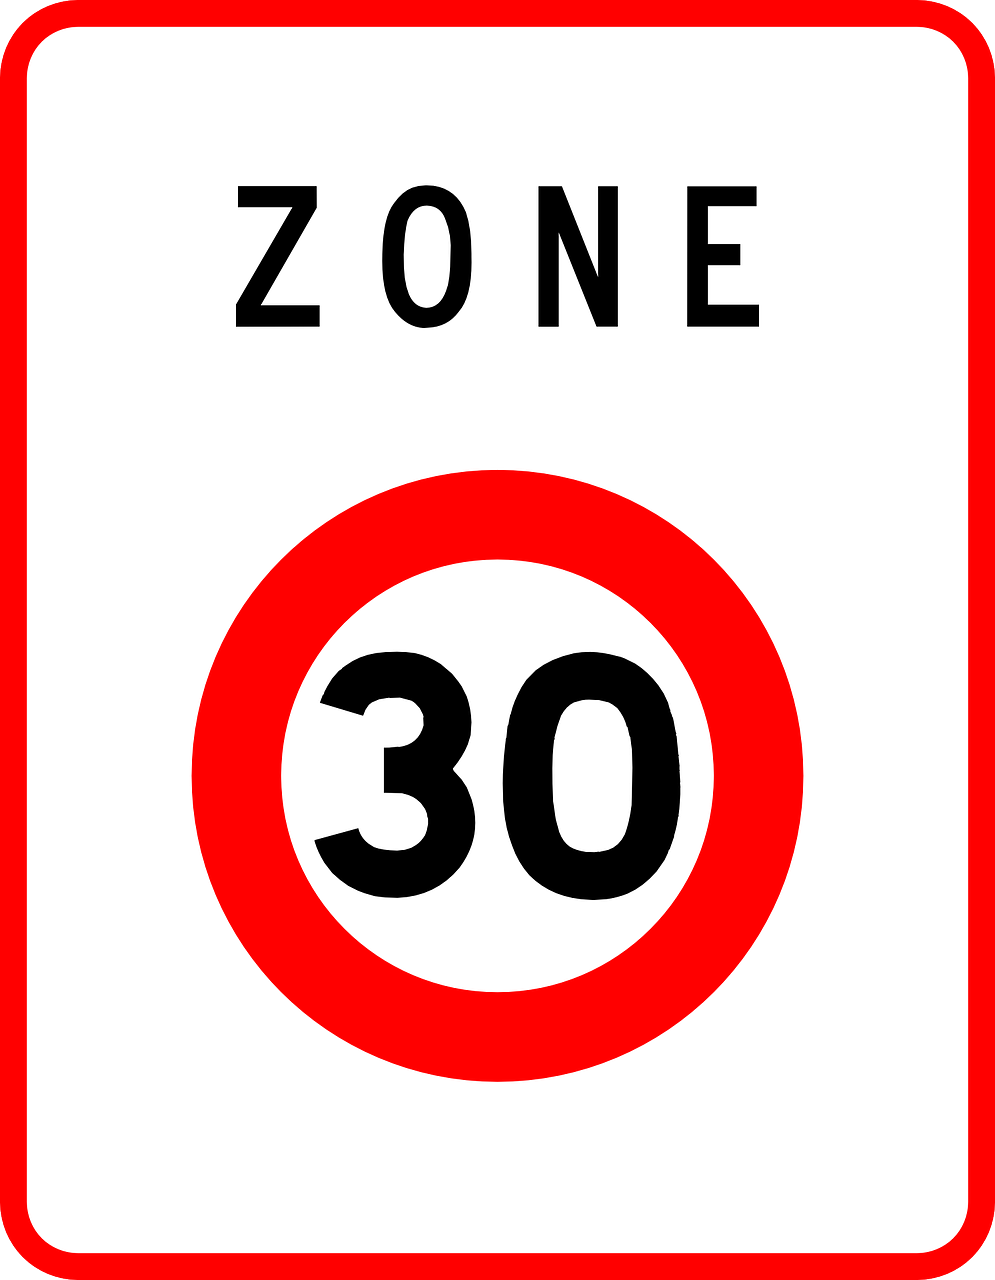 speed limit zone 30 free photo